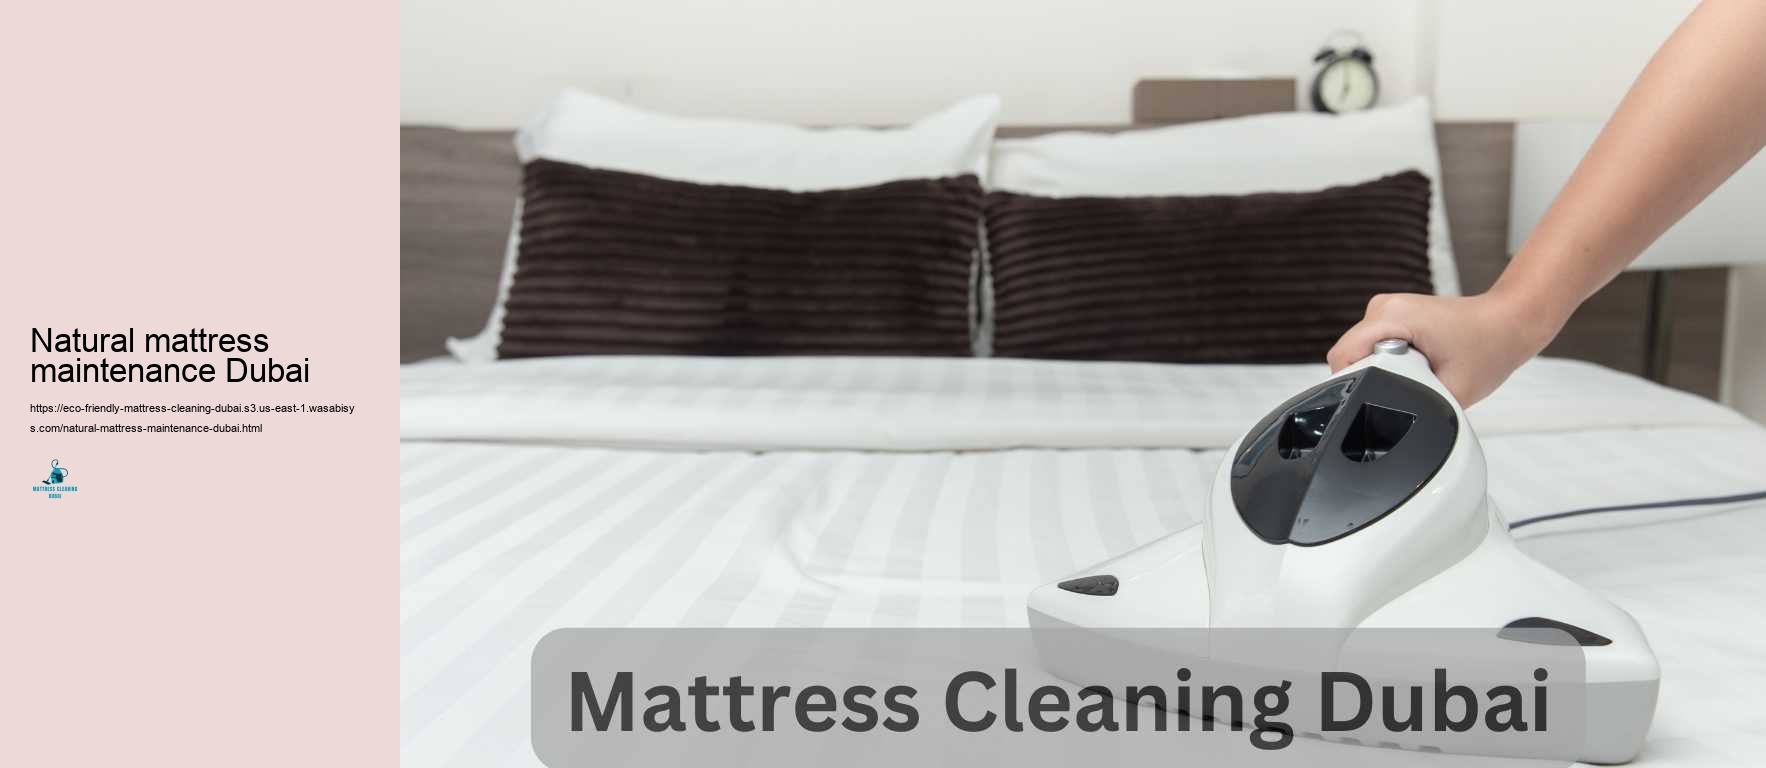 Natural mattress maintenance Dubai